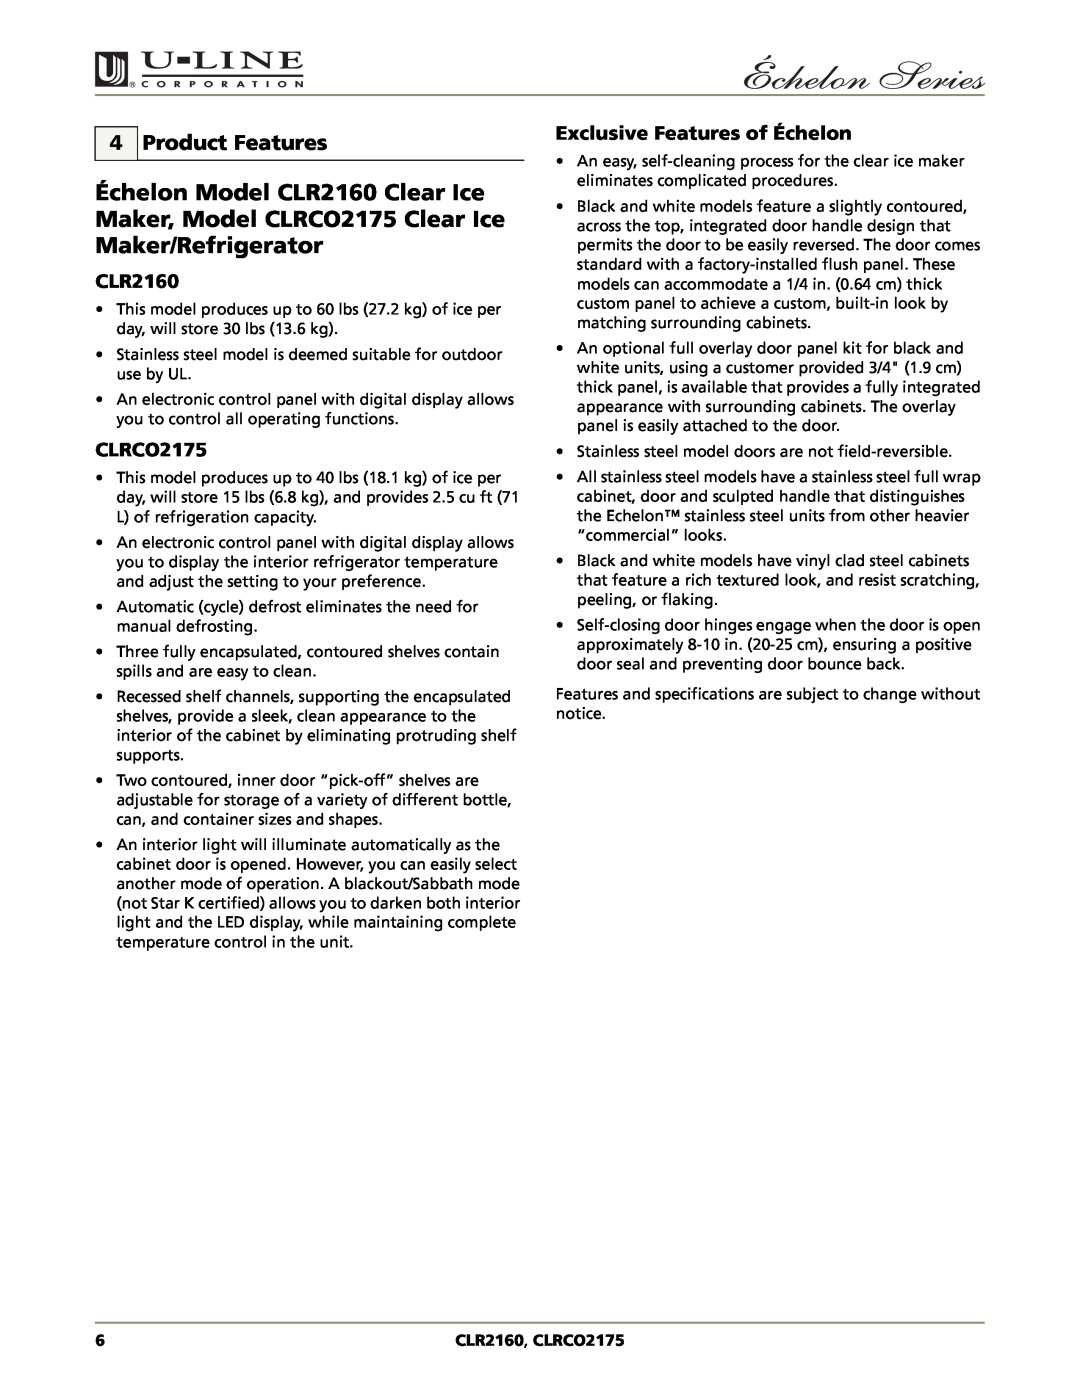 U-Line CLRCO2175 manual Product Features, CLR2160, Exclusive Features of Échelon 